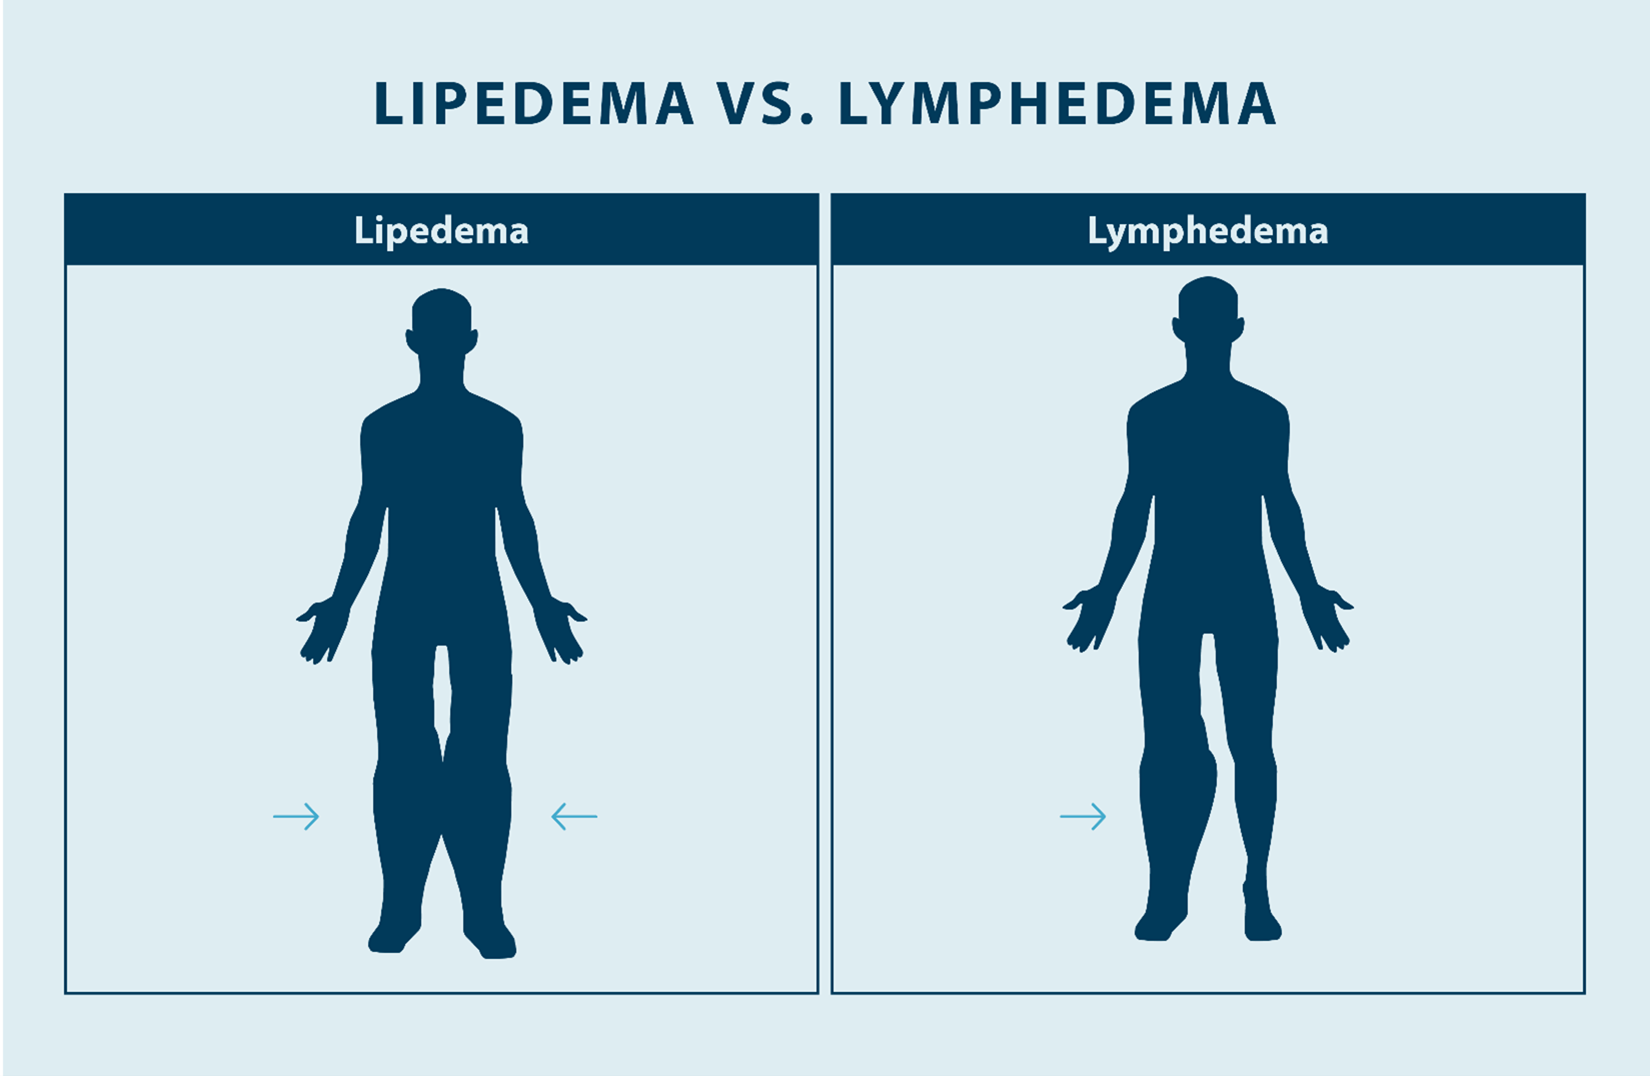 image showing lipedema versus lymphedema